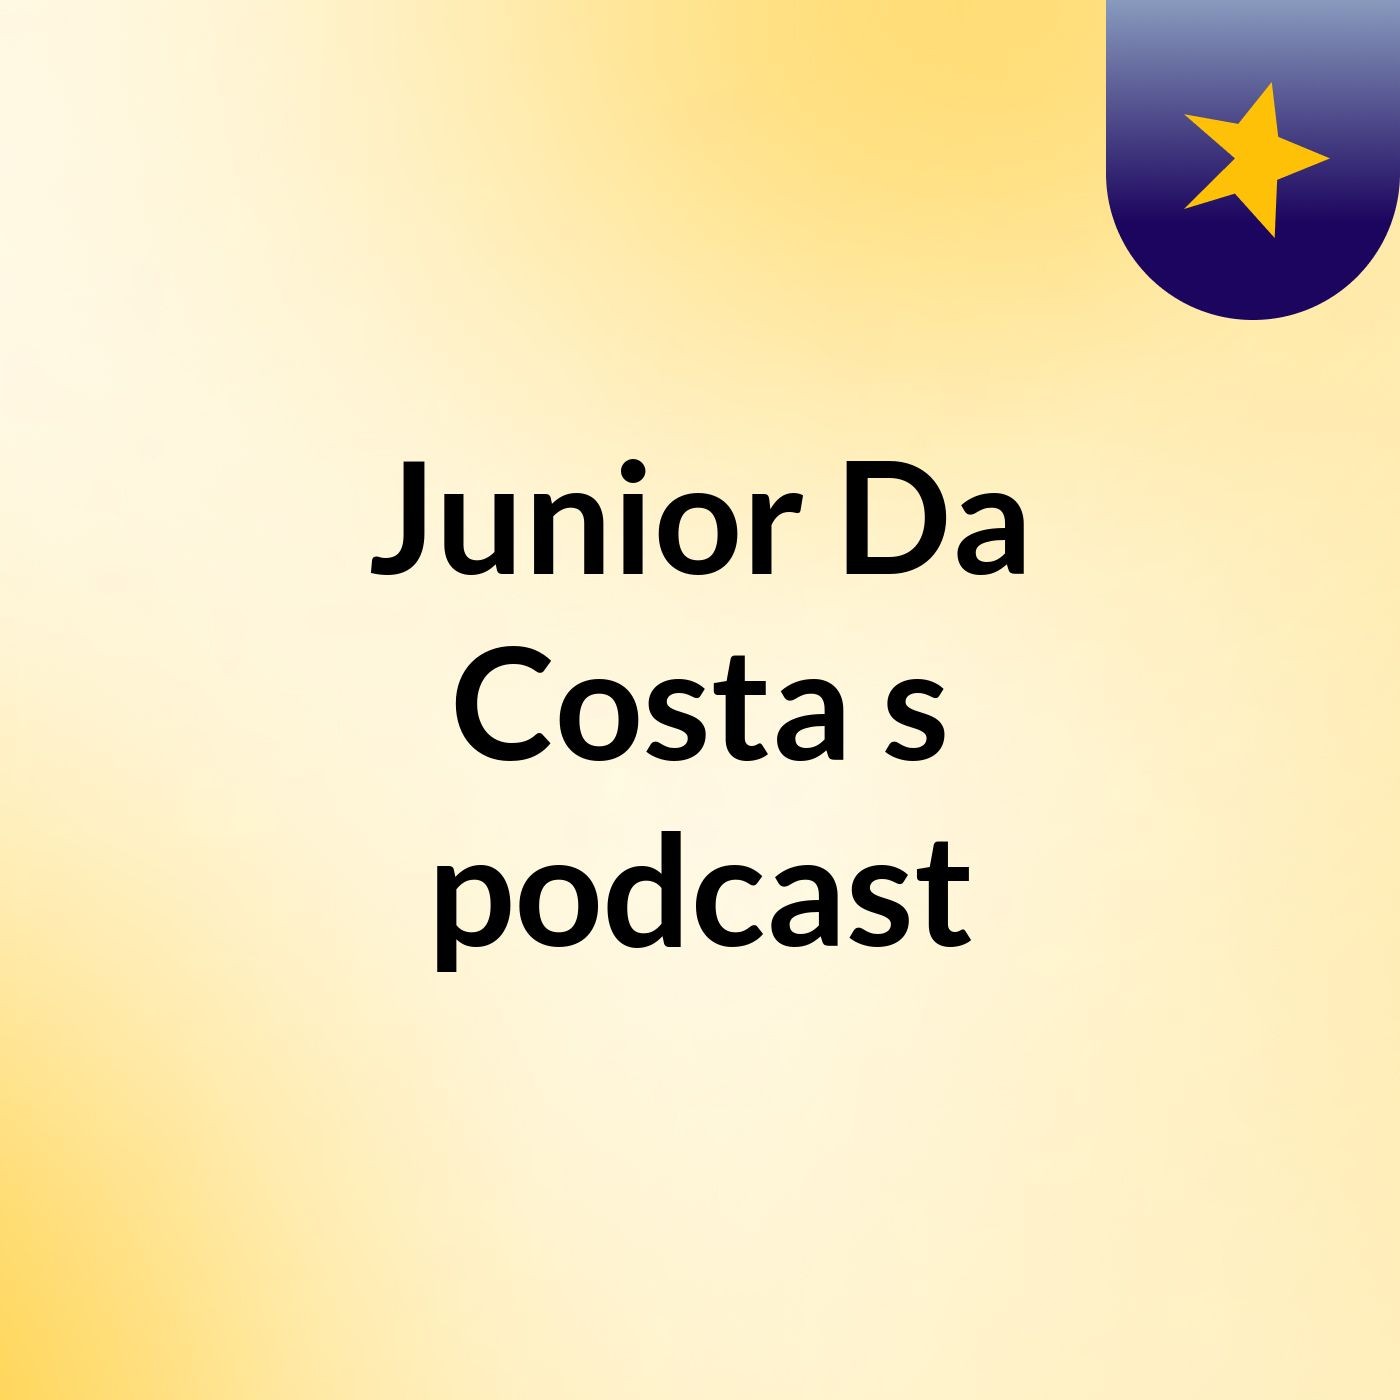 Junior Da Costa's podcast